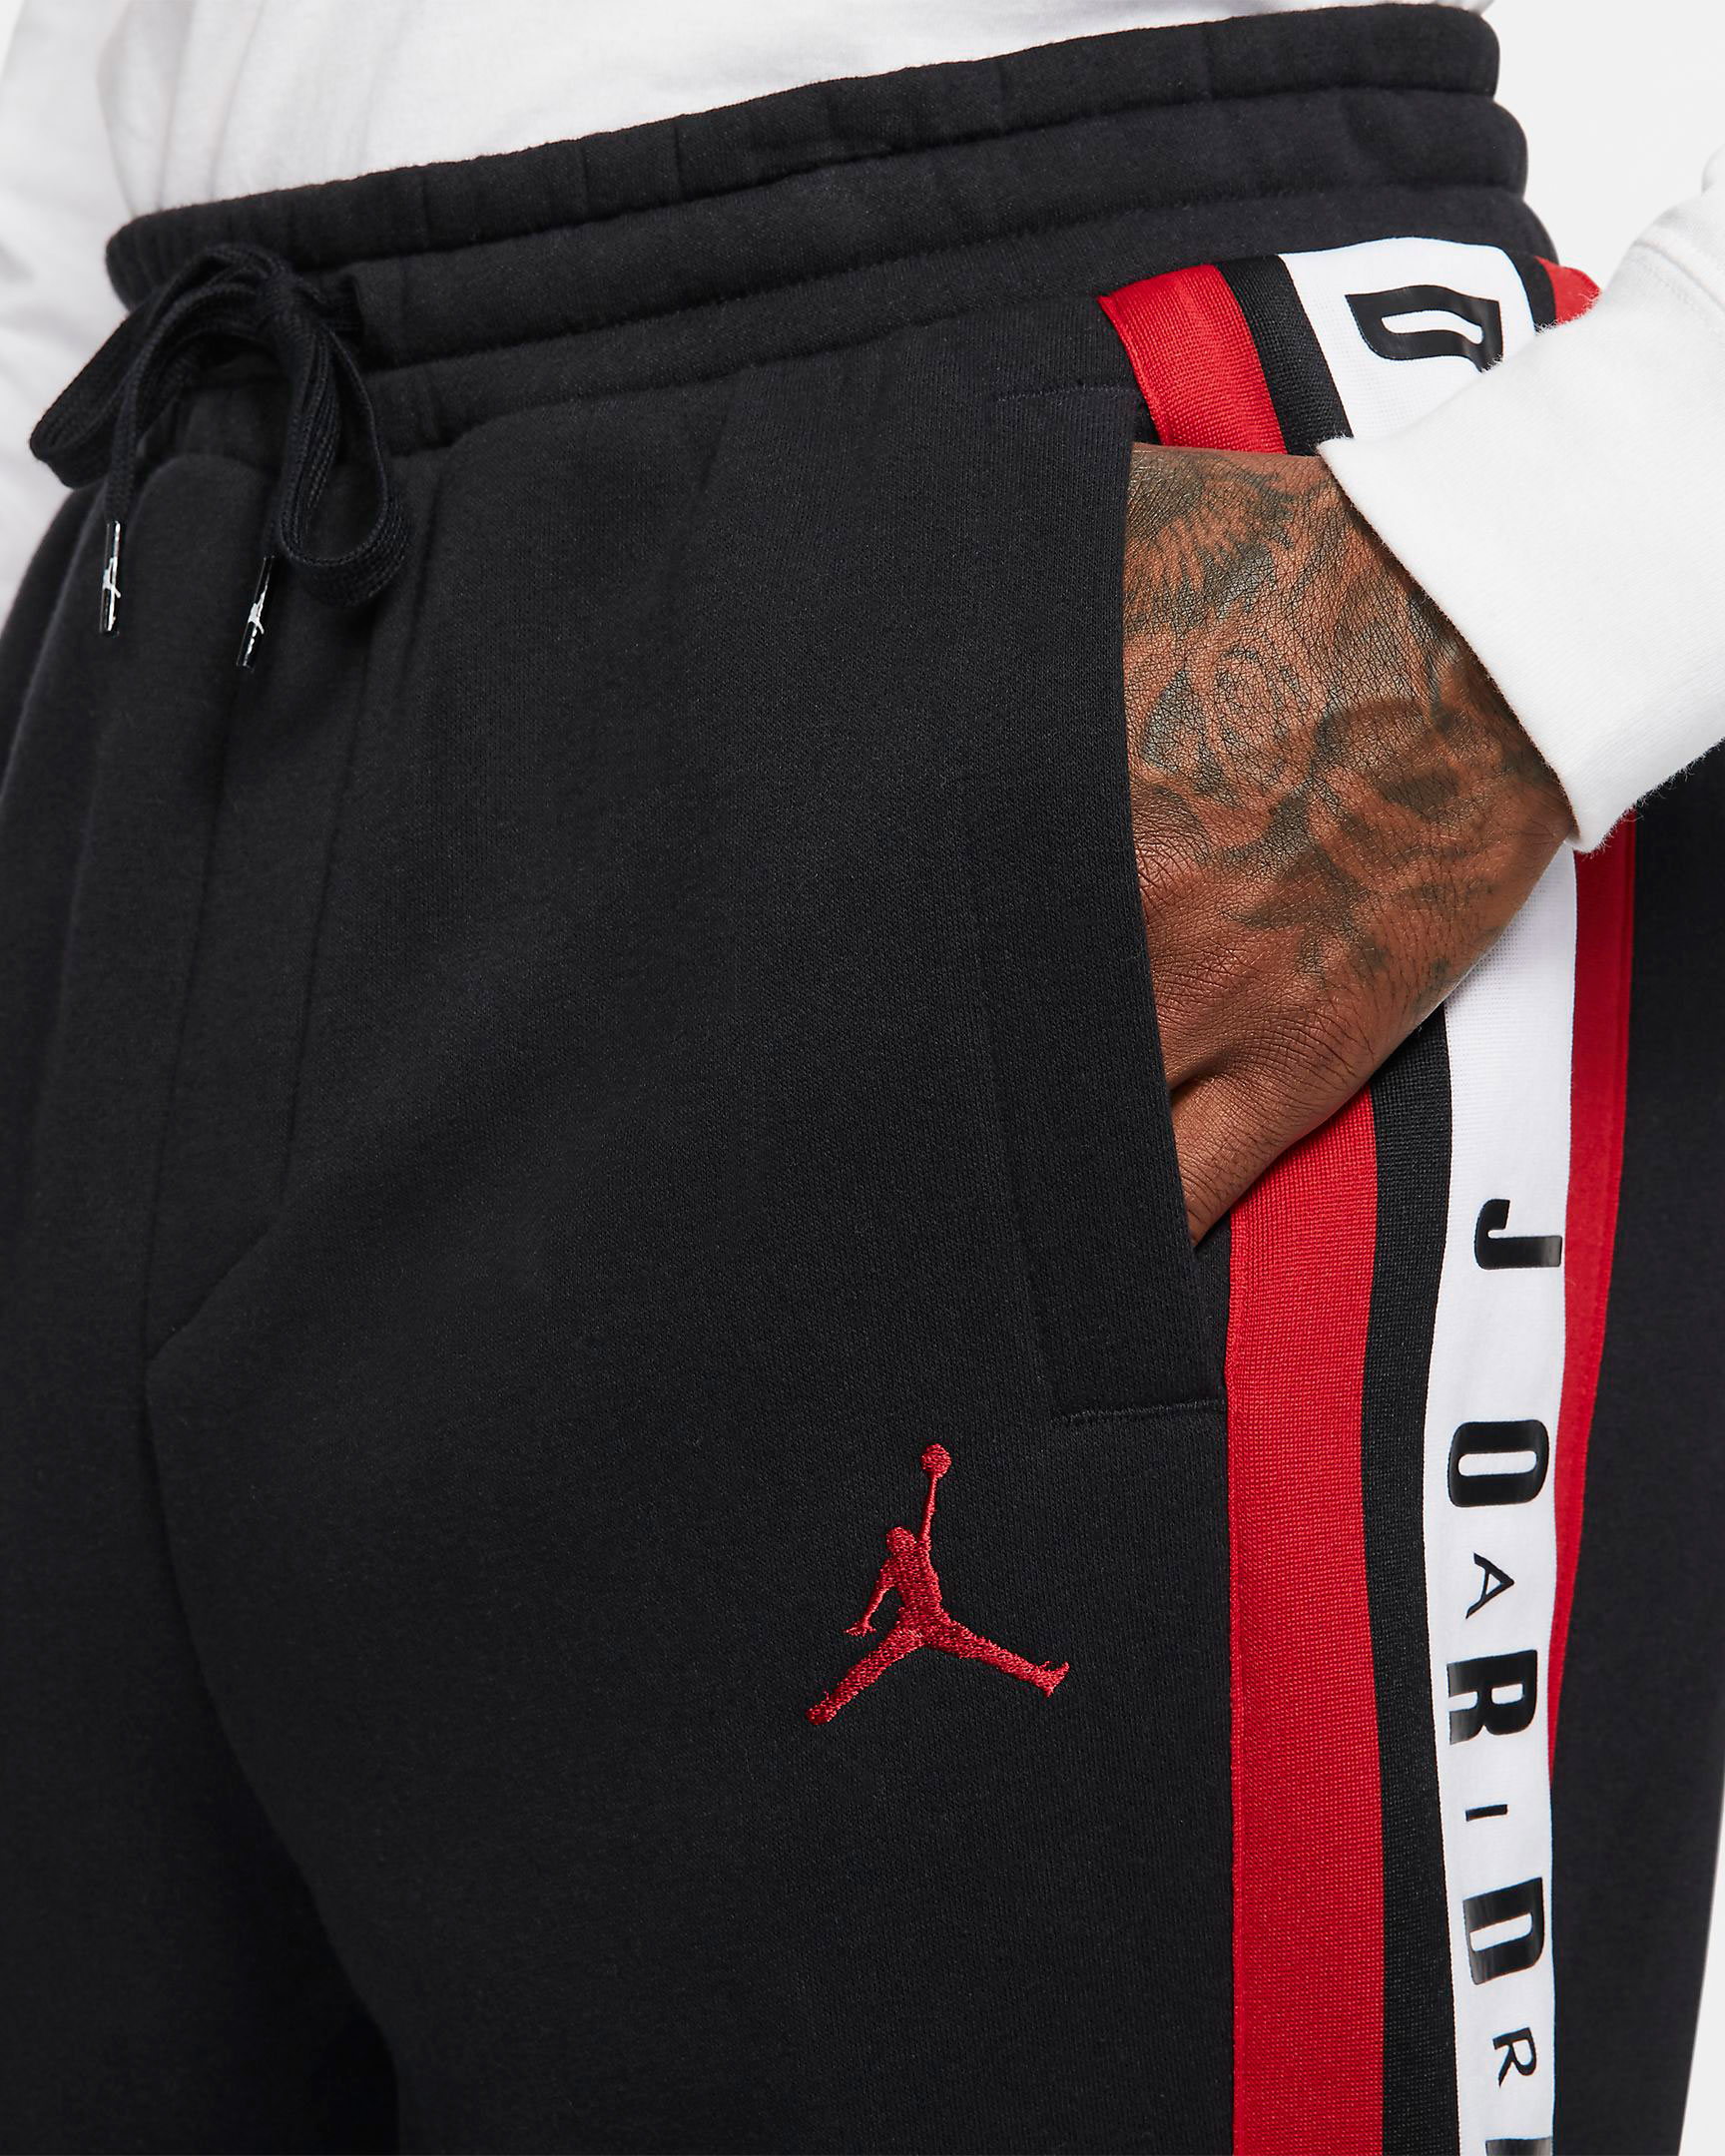 Jordan Air Fleece Pants for Fall 2019 | SneakerFits.com